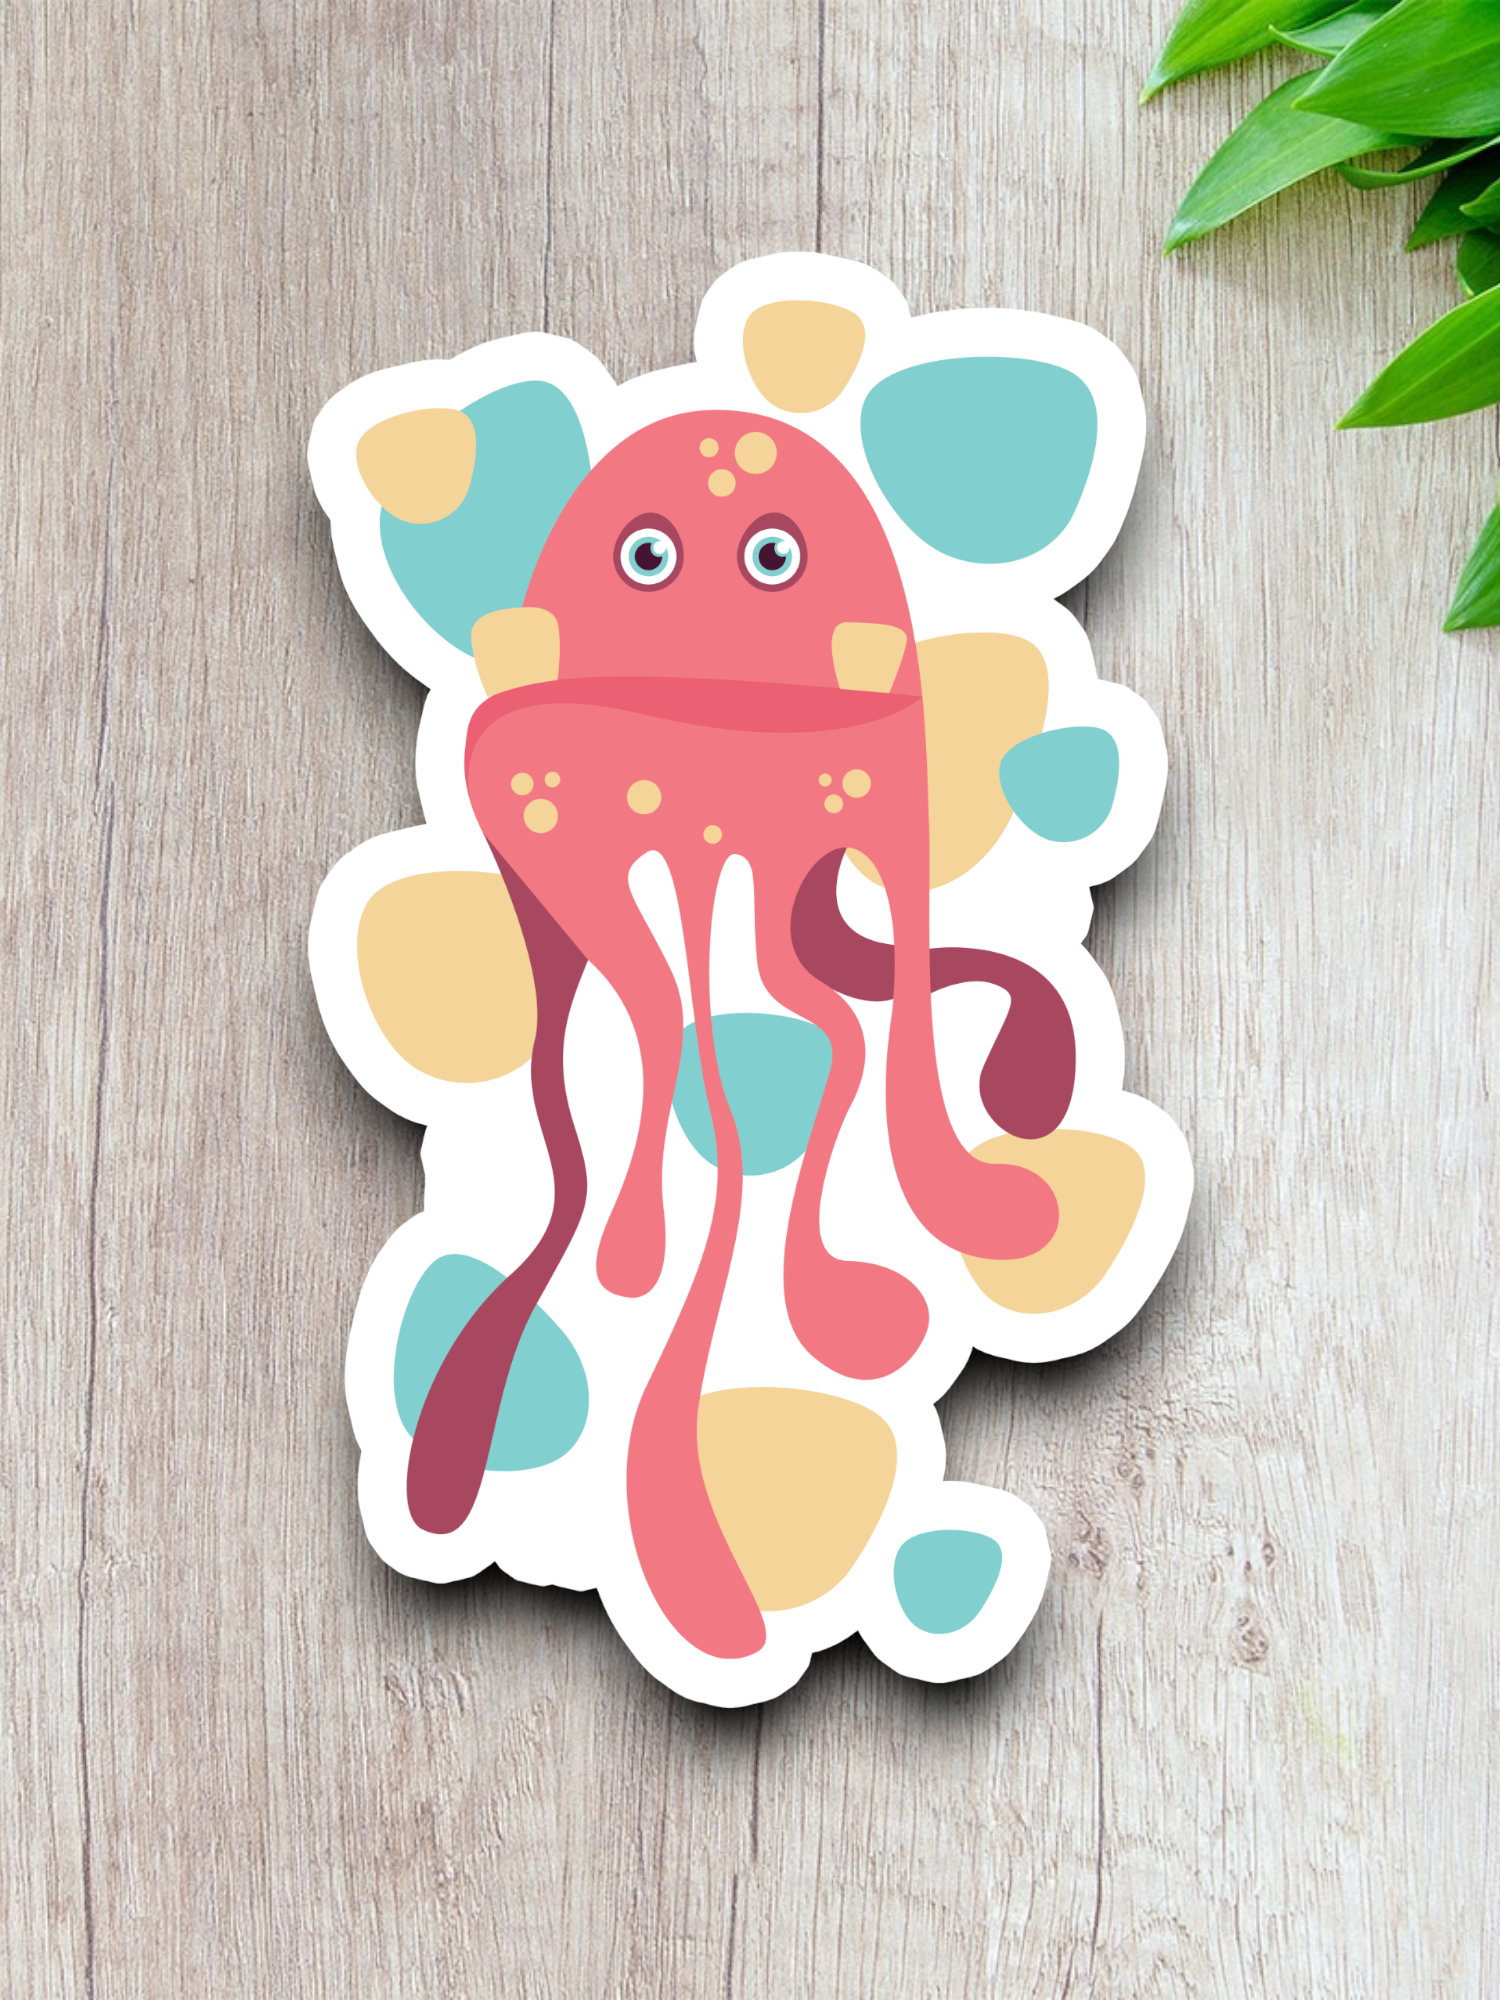 Artistic Squid Version 2 - Artistic Sticker